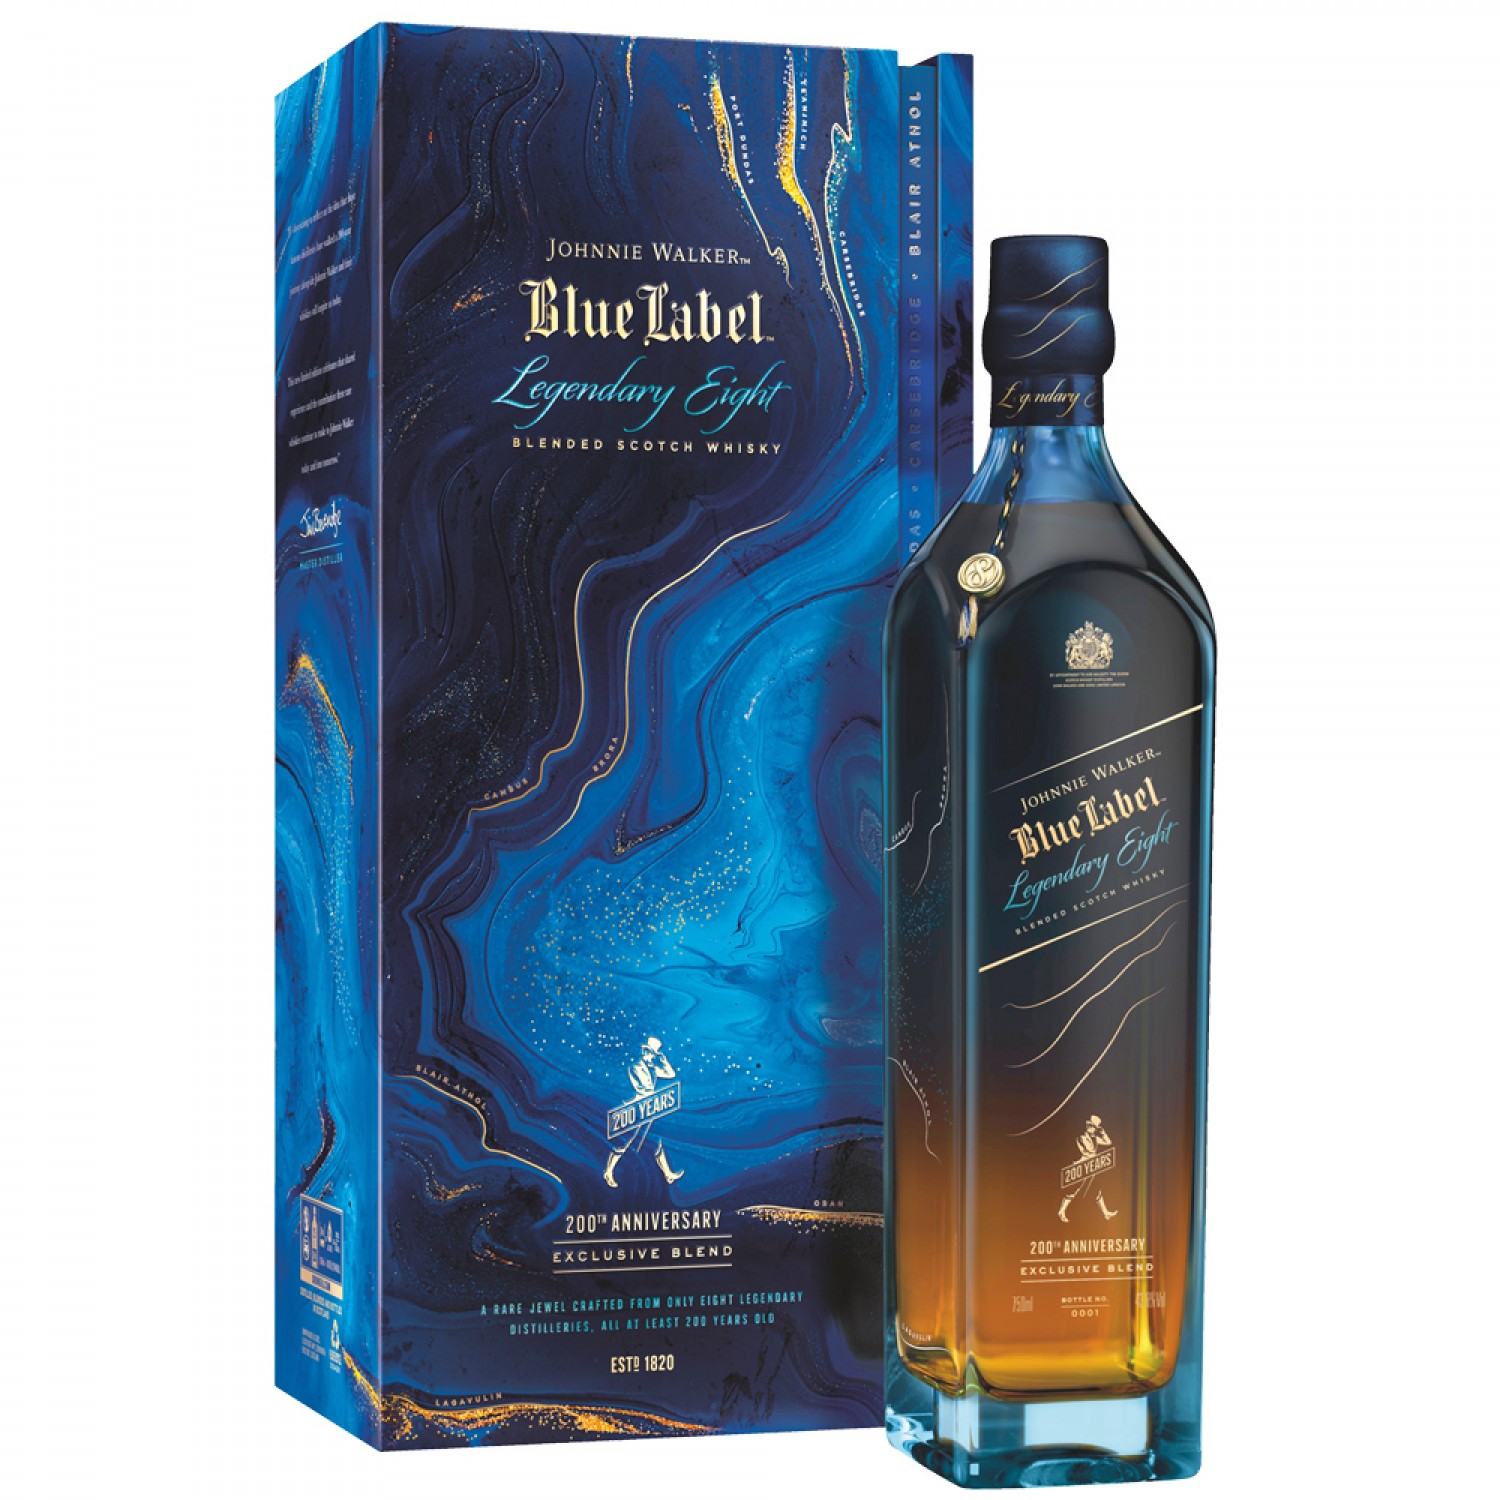 Johnnie Walker Blue Label Legendary Eight 200th Anniversary Exclusive Blend 700ml